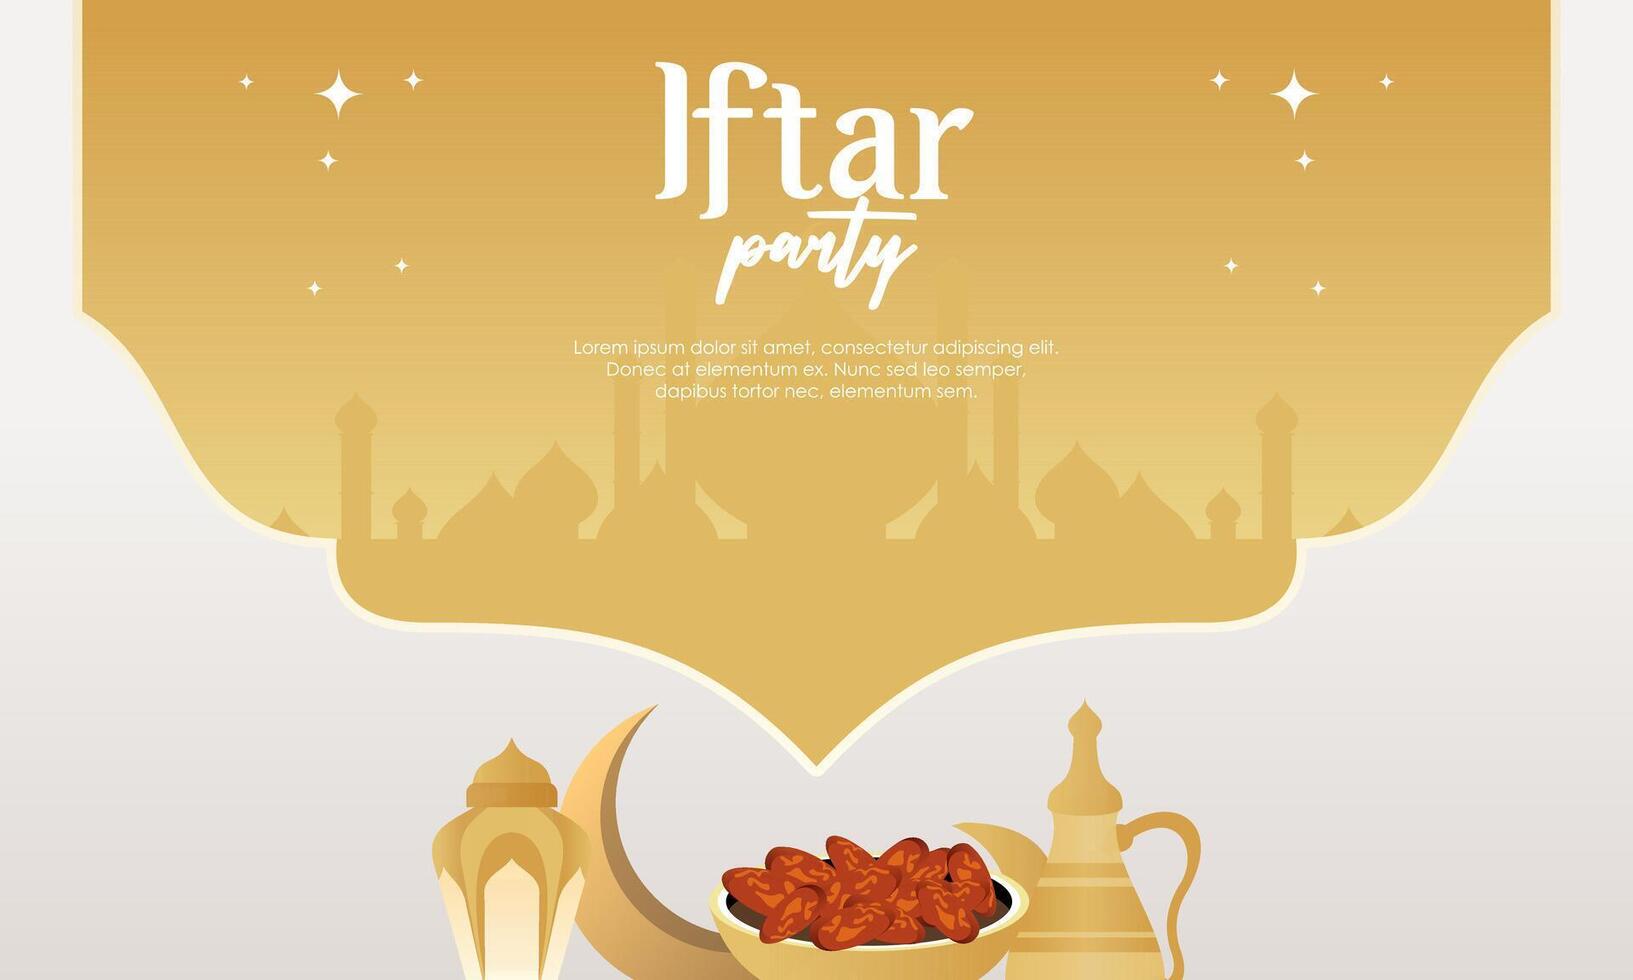 Iftar party celebration concept flyer vector illustration